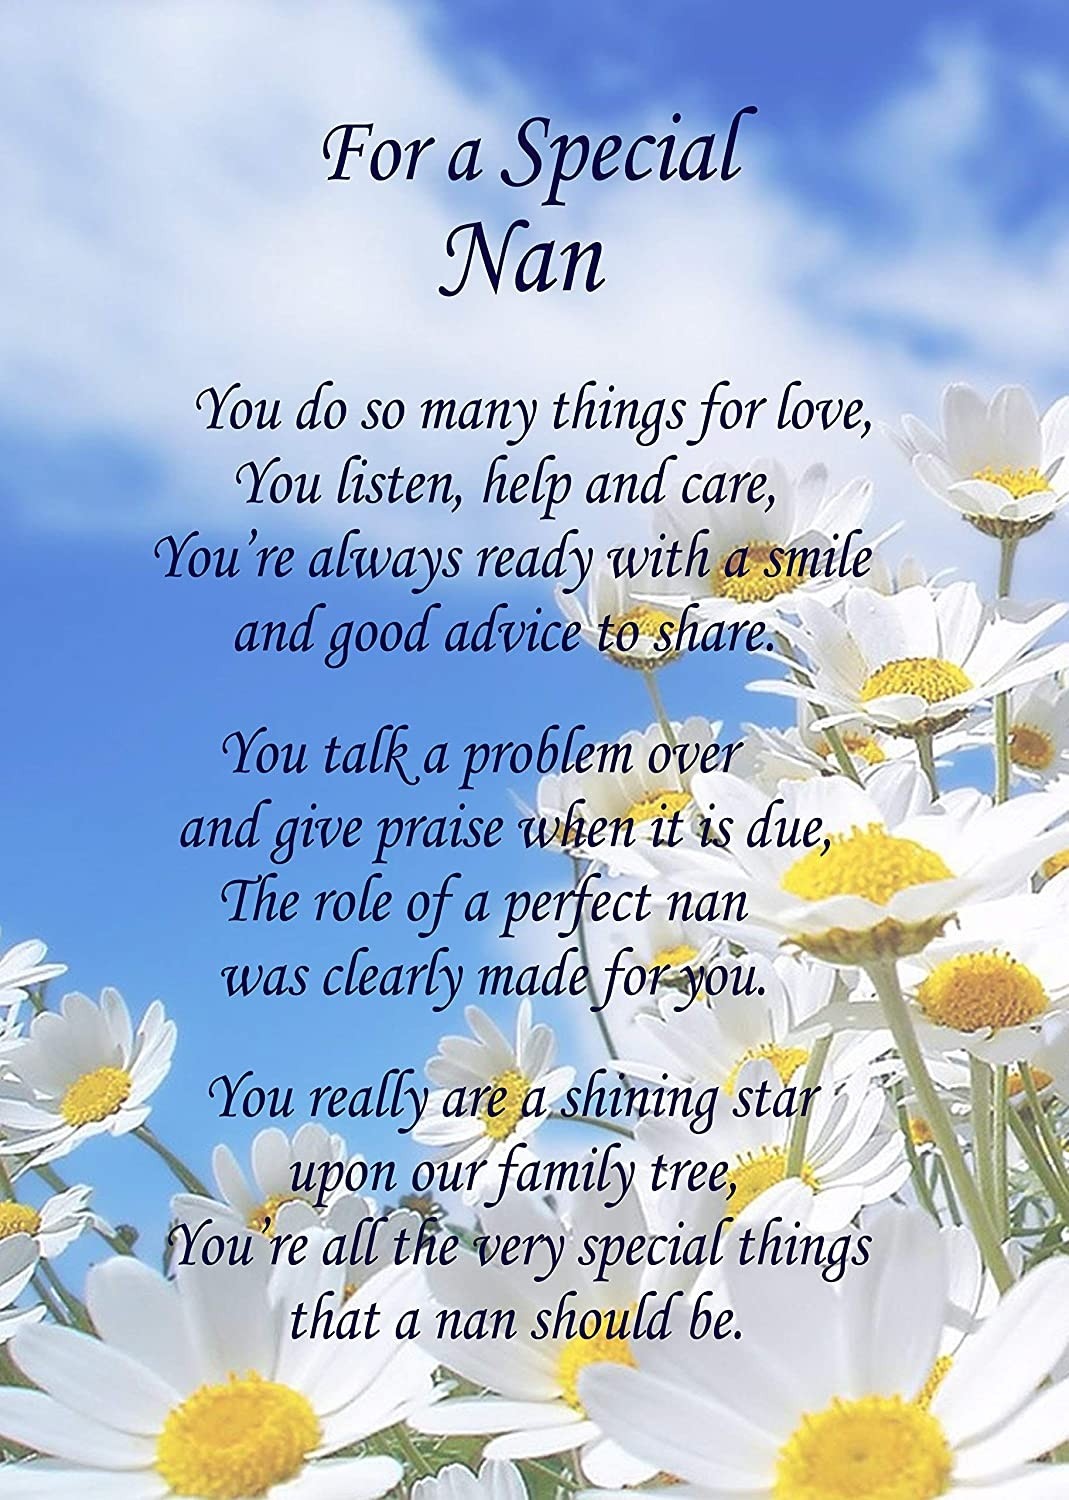 Special Nan Poem Verse Greeting Card